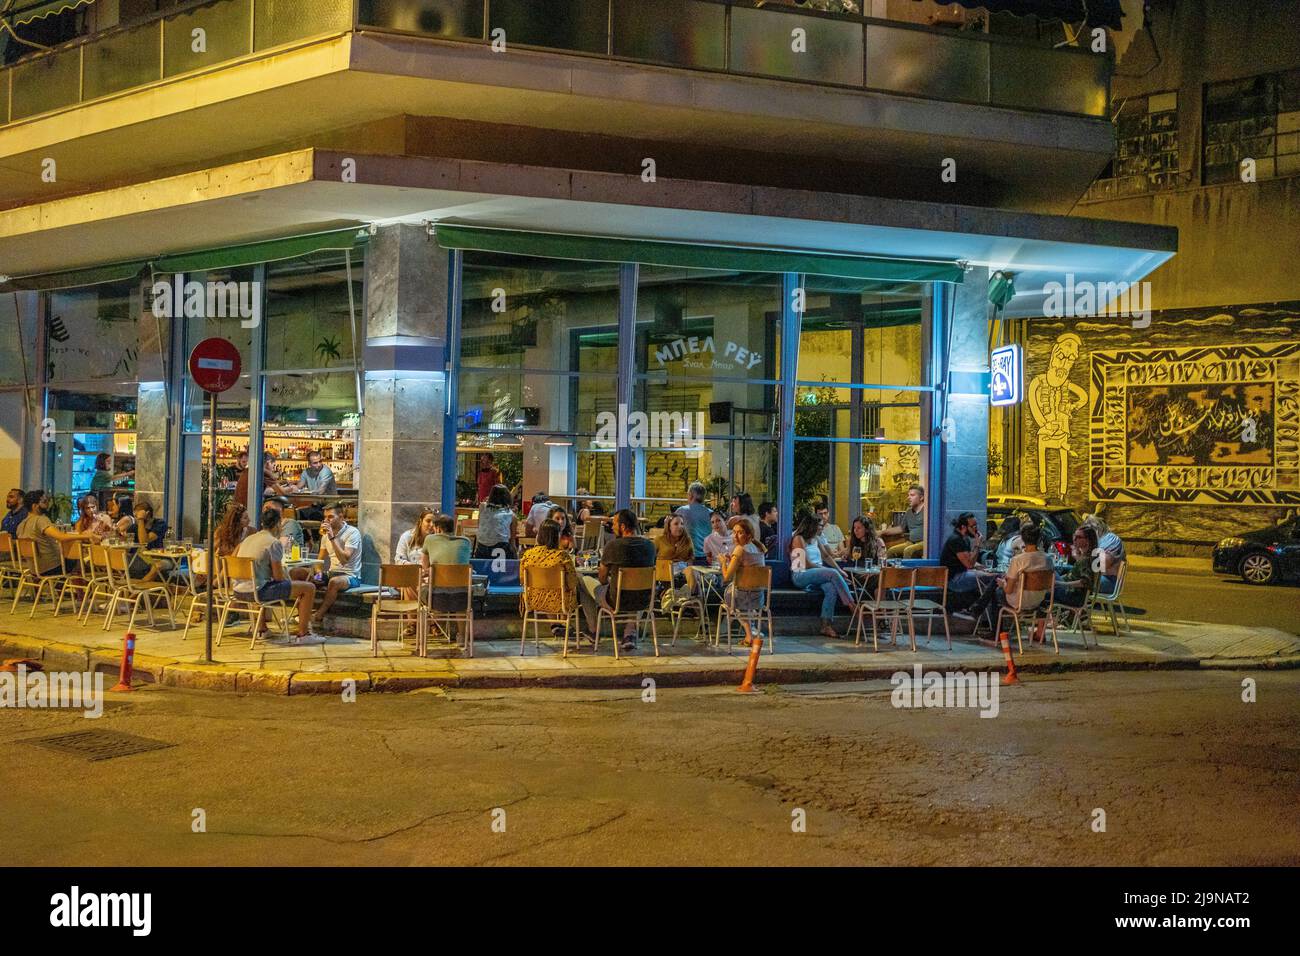 Bel Ray Bar in Koukaki, Athen Stockfoto